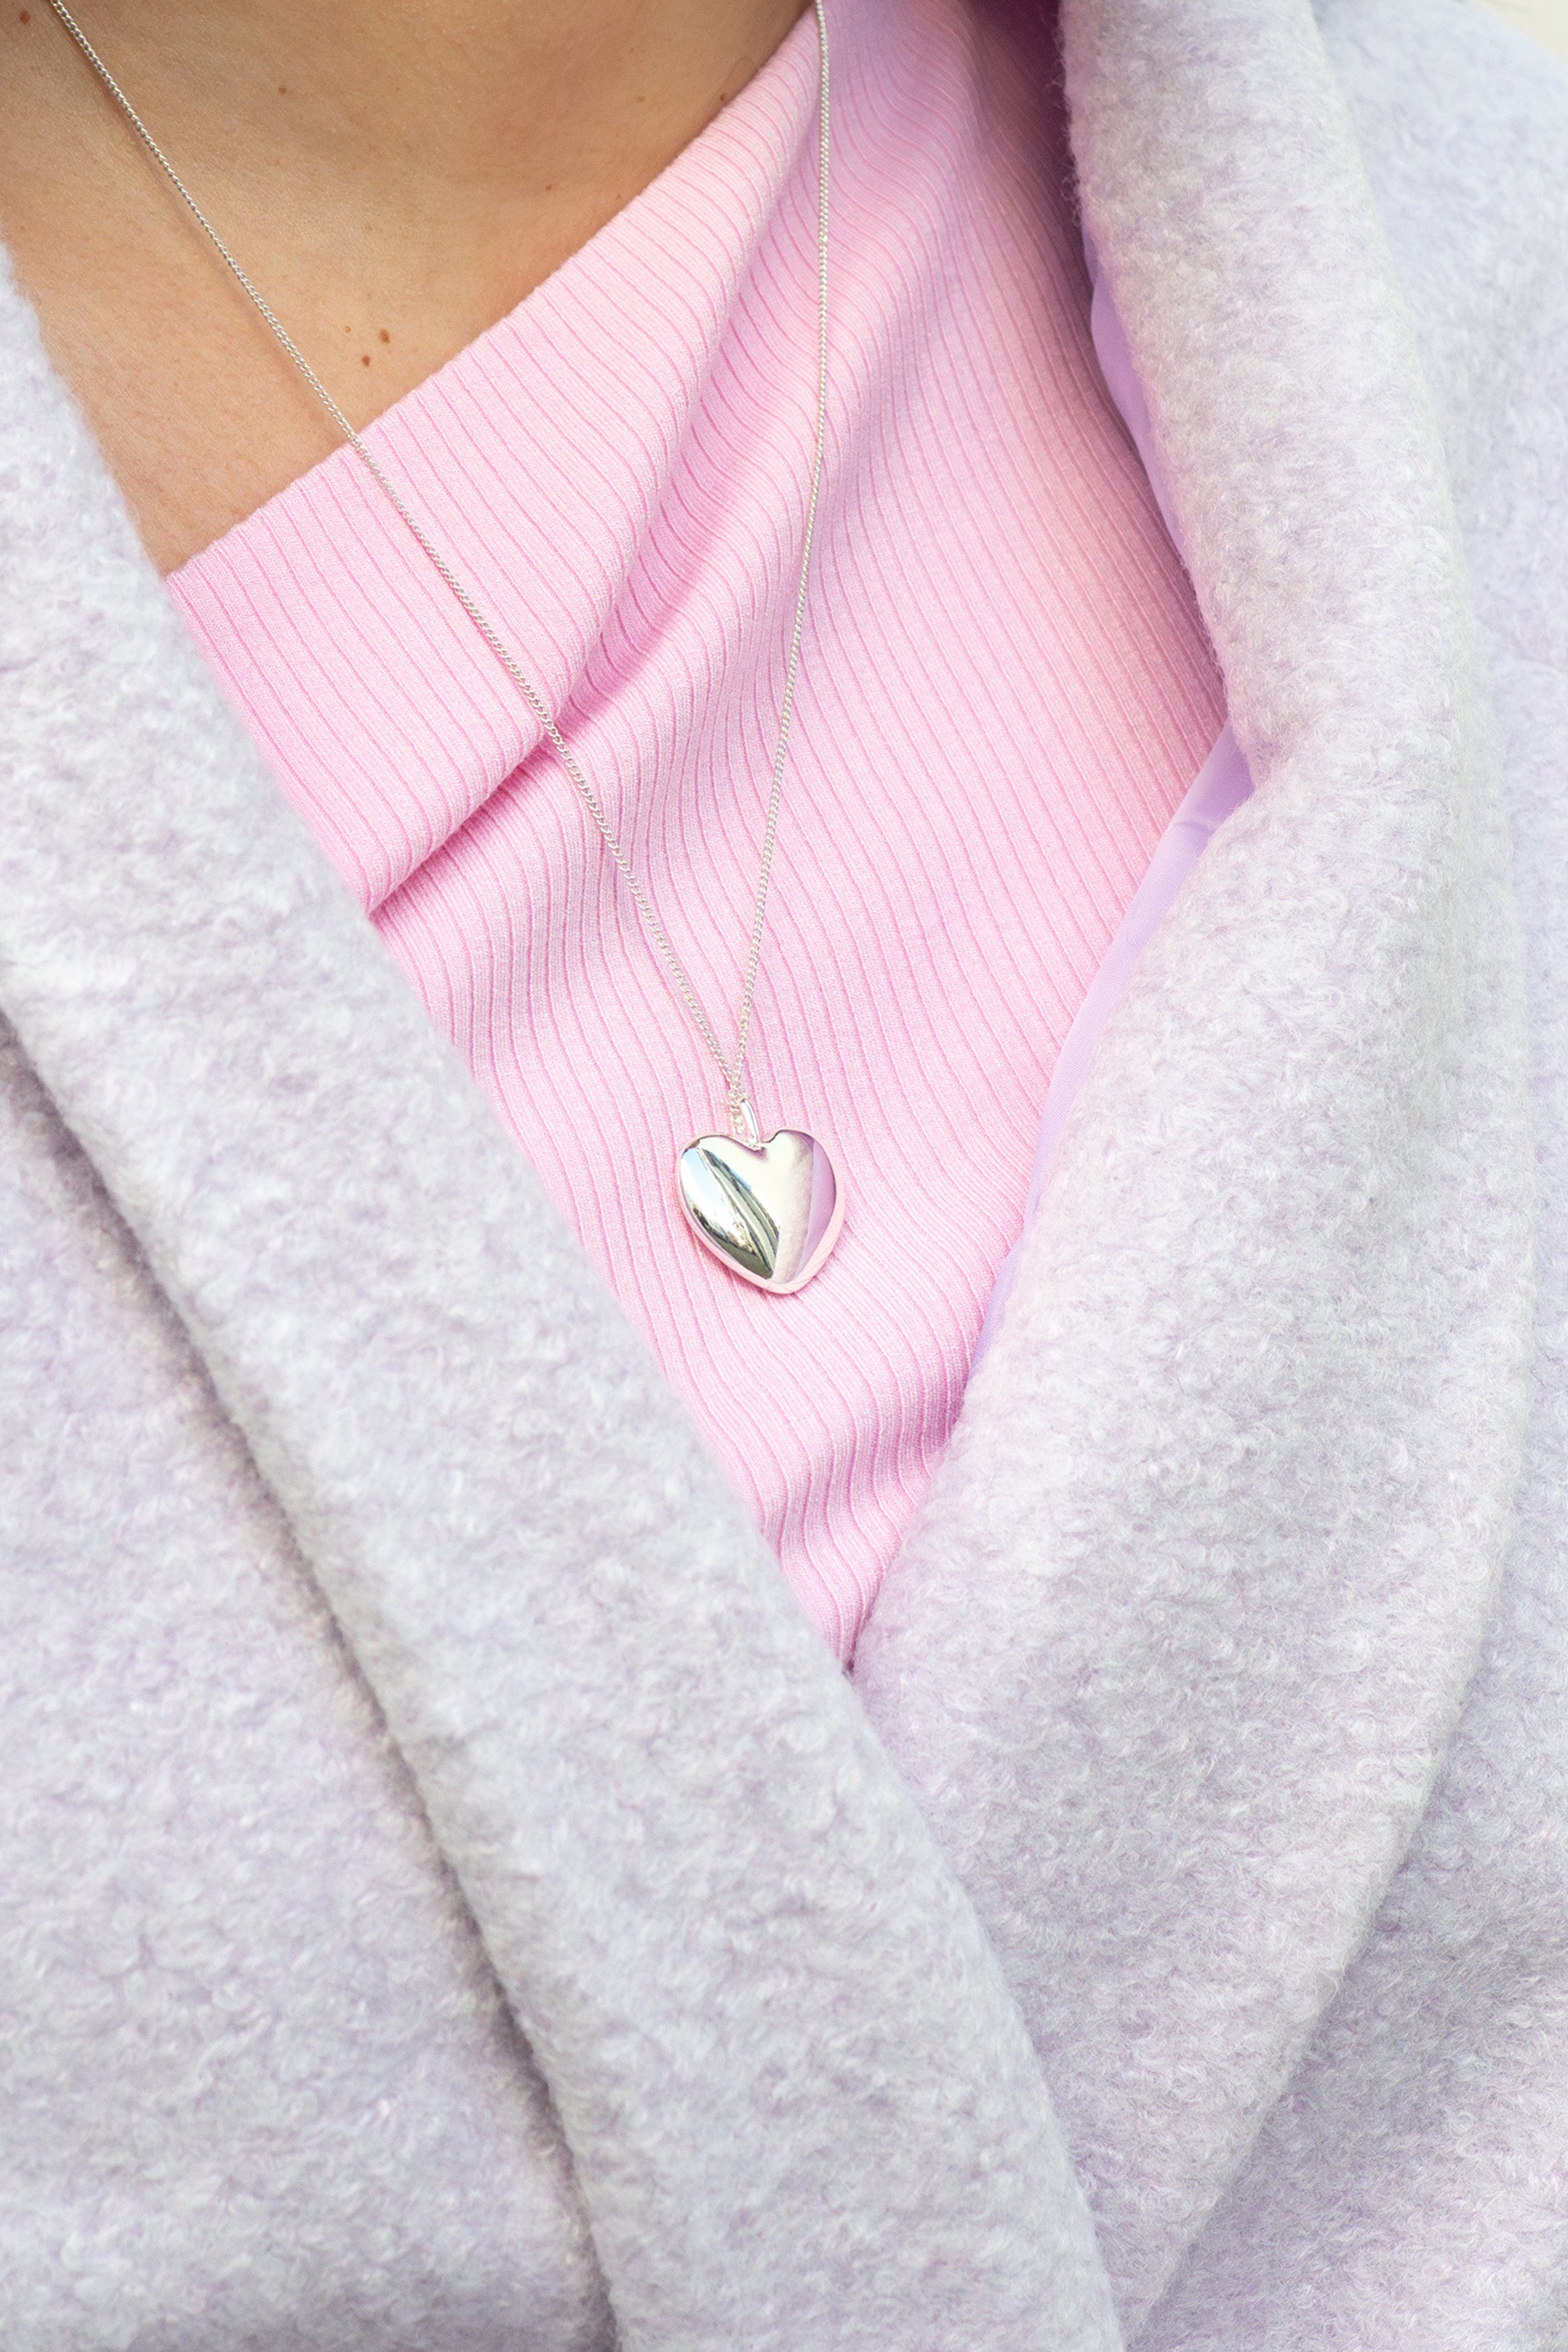 Sophia Heart Pendant Necklace Silver